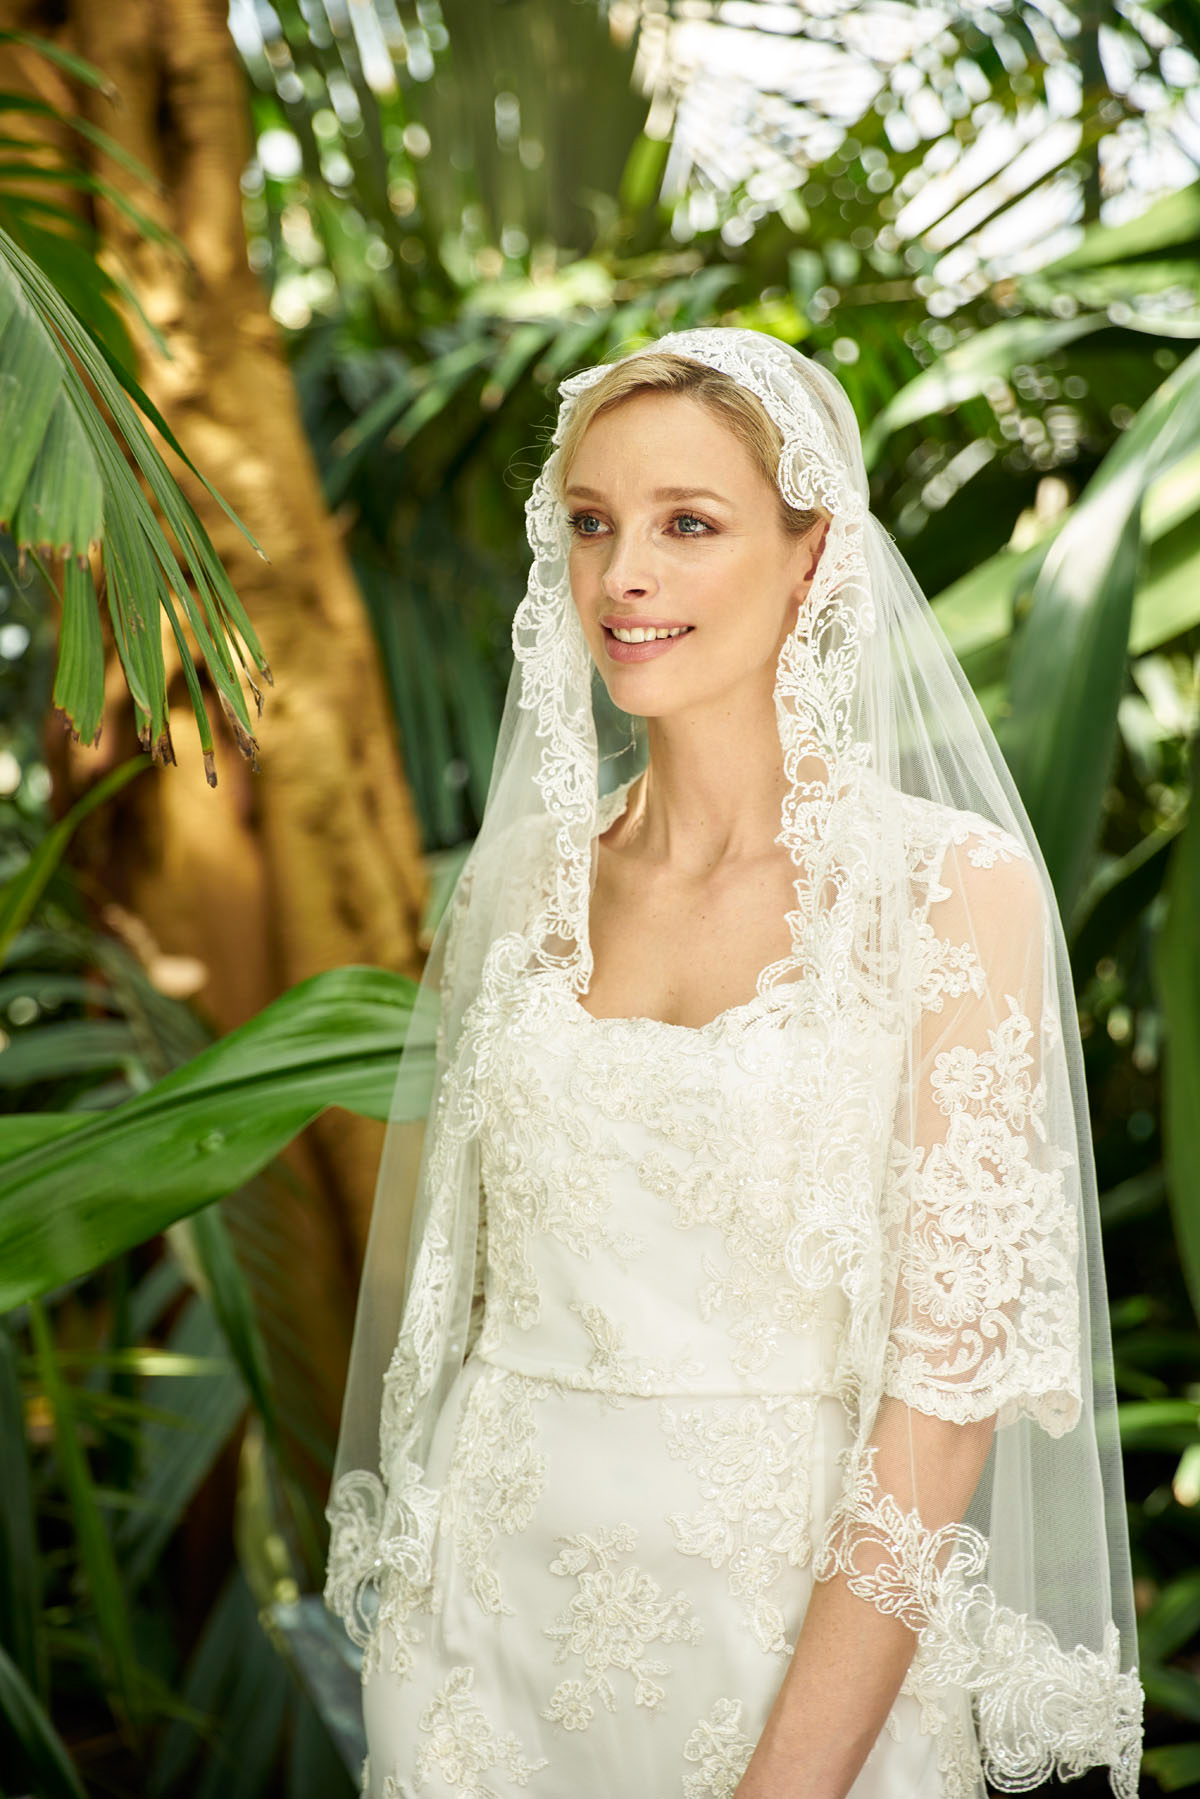 Introducing Francis Bridal - modern contemporary bohemian wedding dresses.